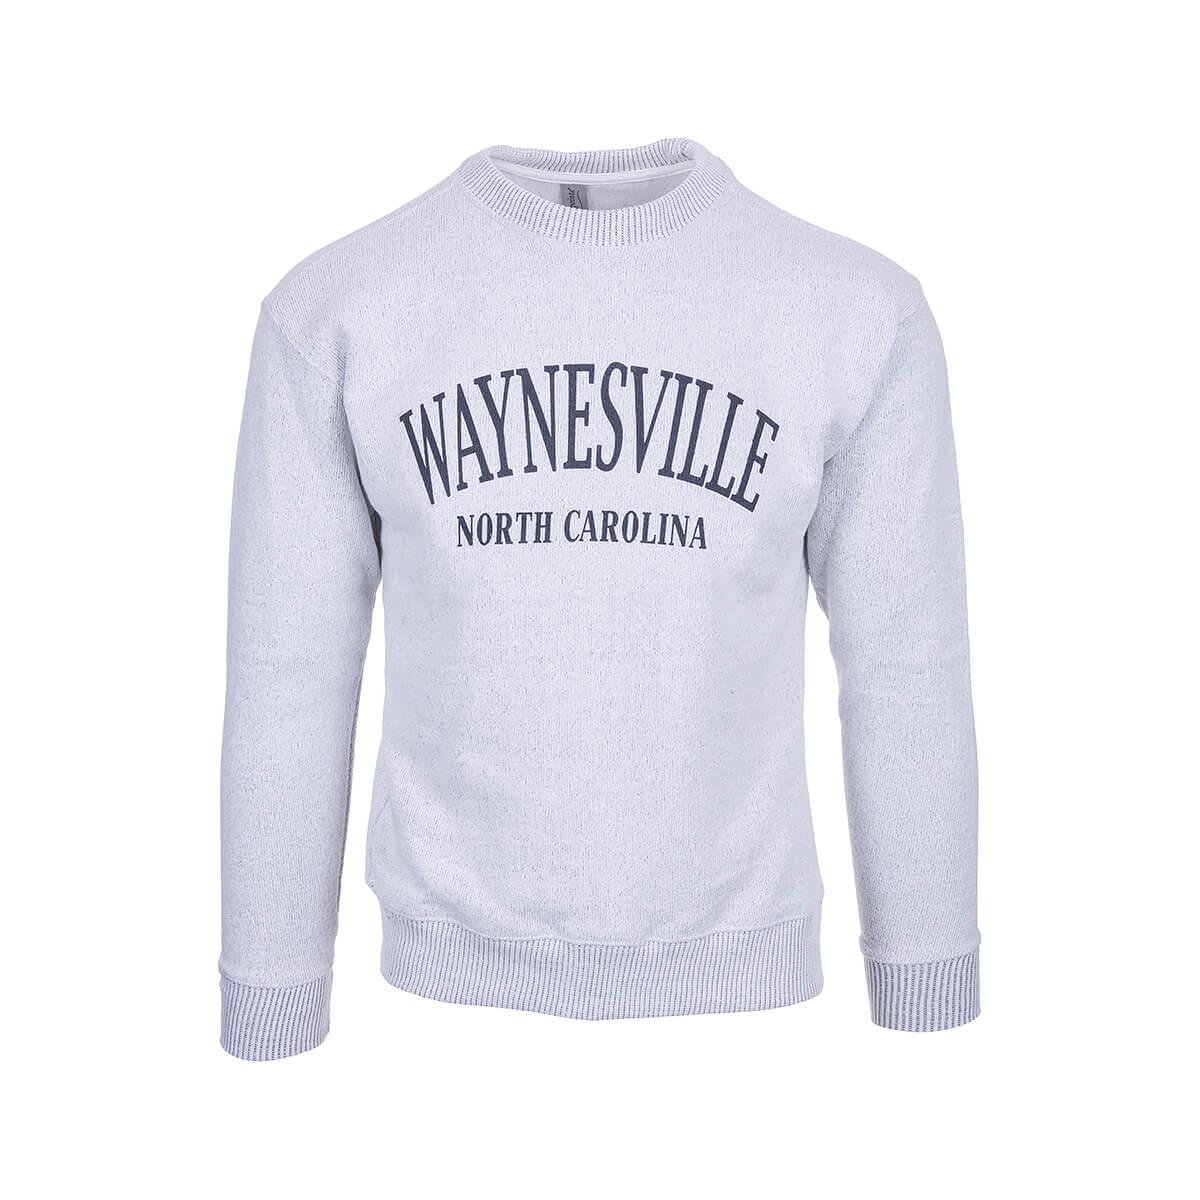  Waynesville Nantucket Crew Neck Knit Sweatshirt